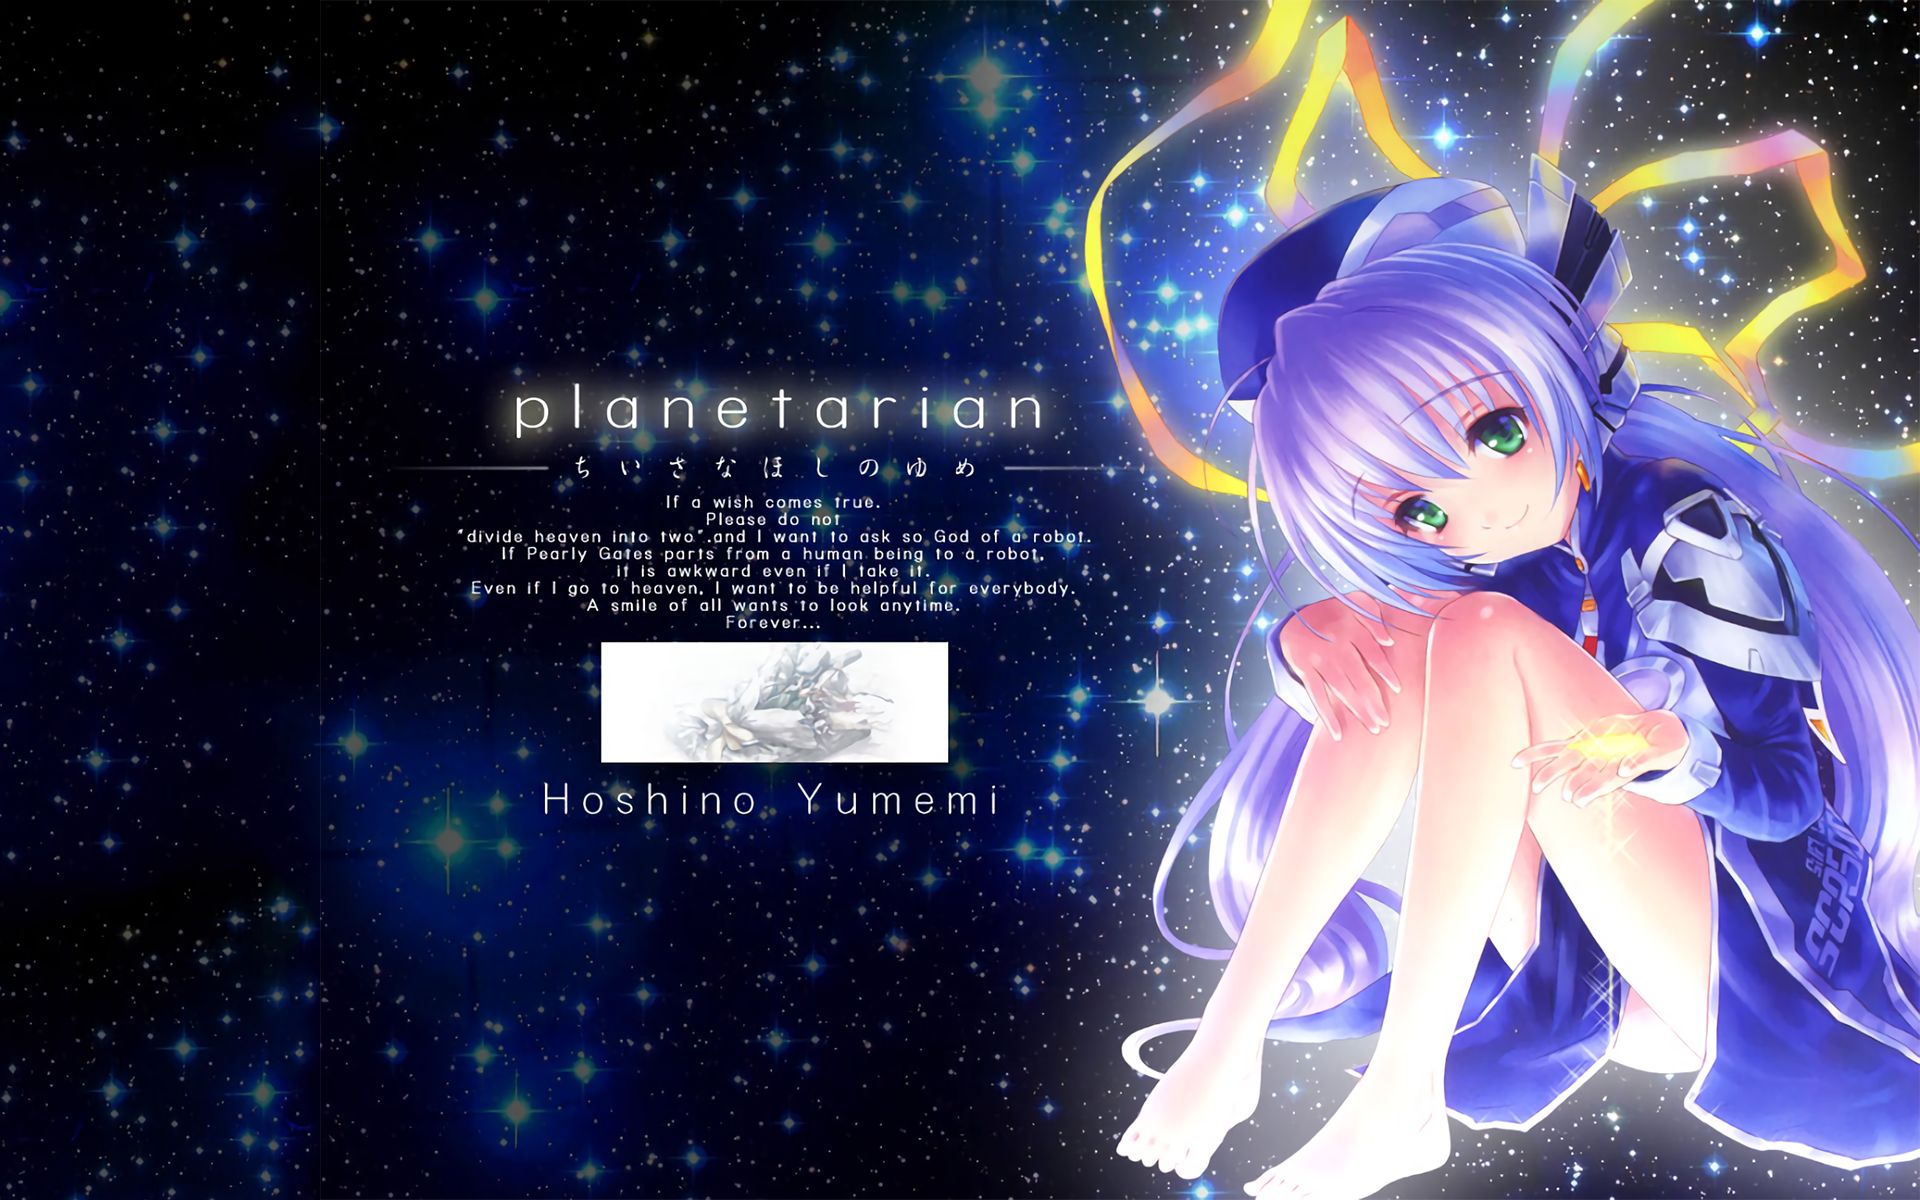 386686 Bild herunterladen animes, planetarian: chiisana hoshi no yume, yumemi hoshino, planetarier - Hintergrundbilder und Bildschirmschoner kostenlos